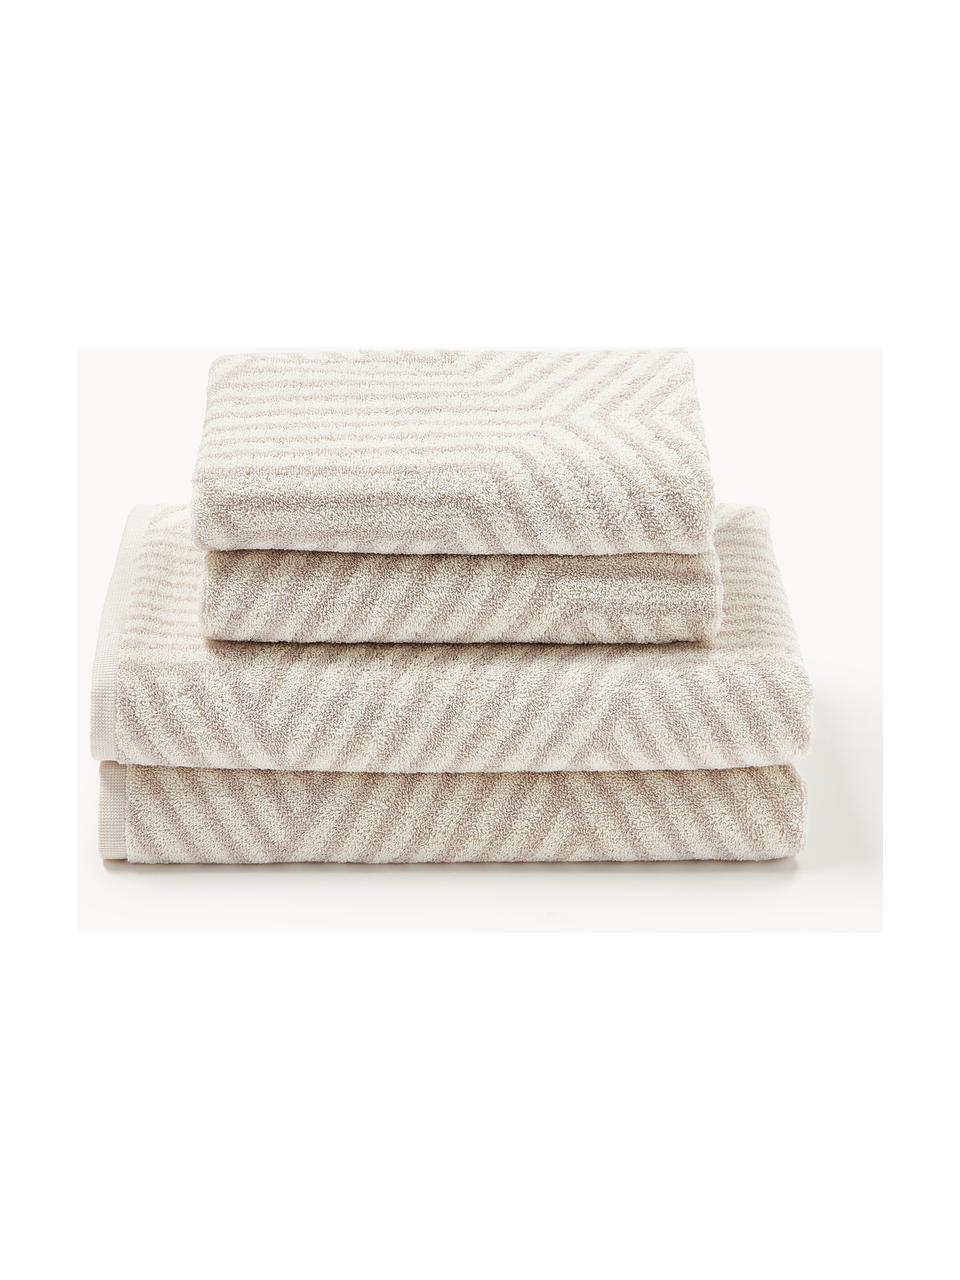 Set de toallas Fatu, tamaños diferentes, Tonos beige claros, Set de 3 (toalla tocador, toalla lavabo y toalla de ducha)